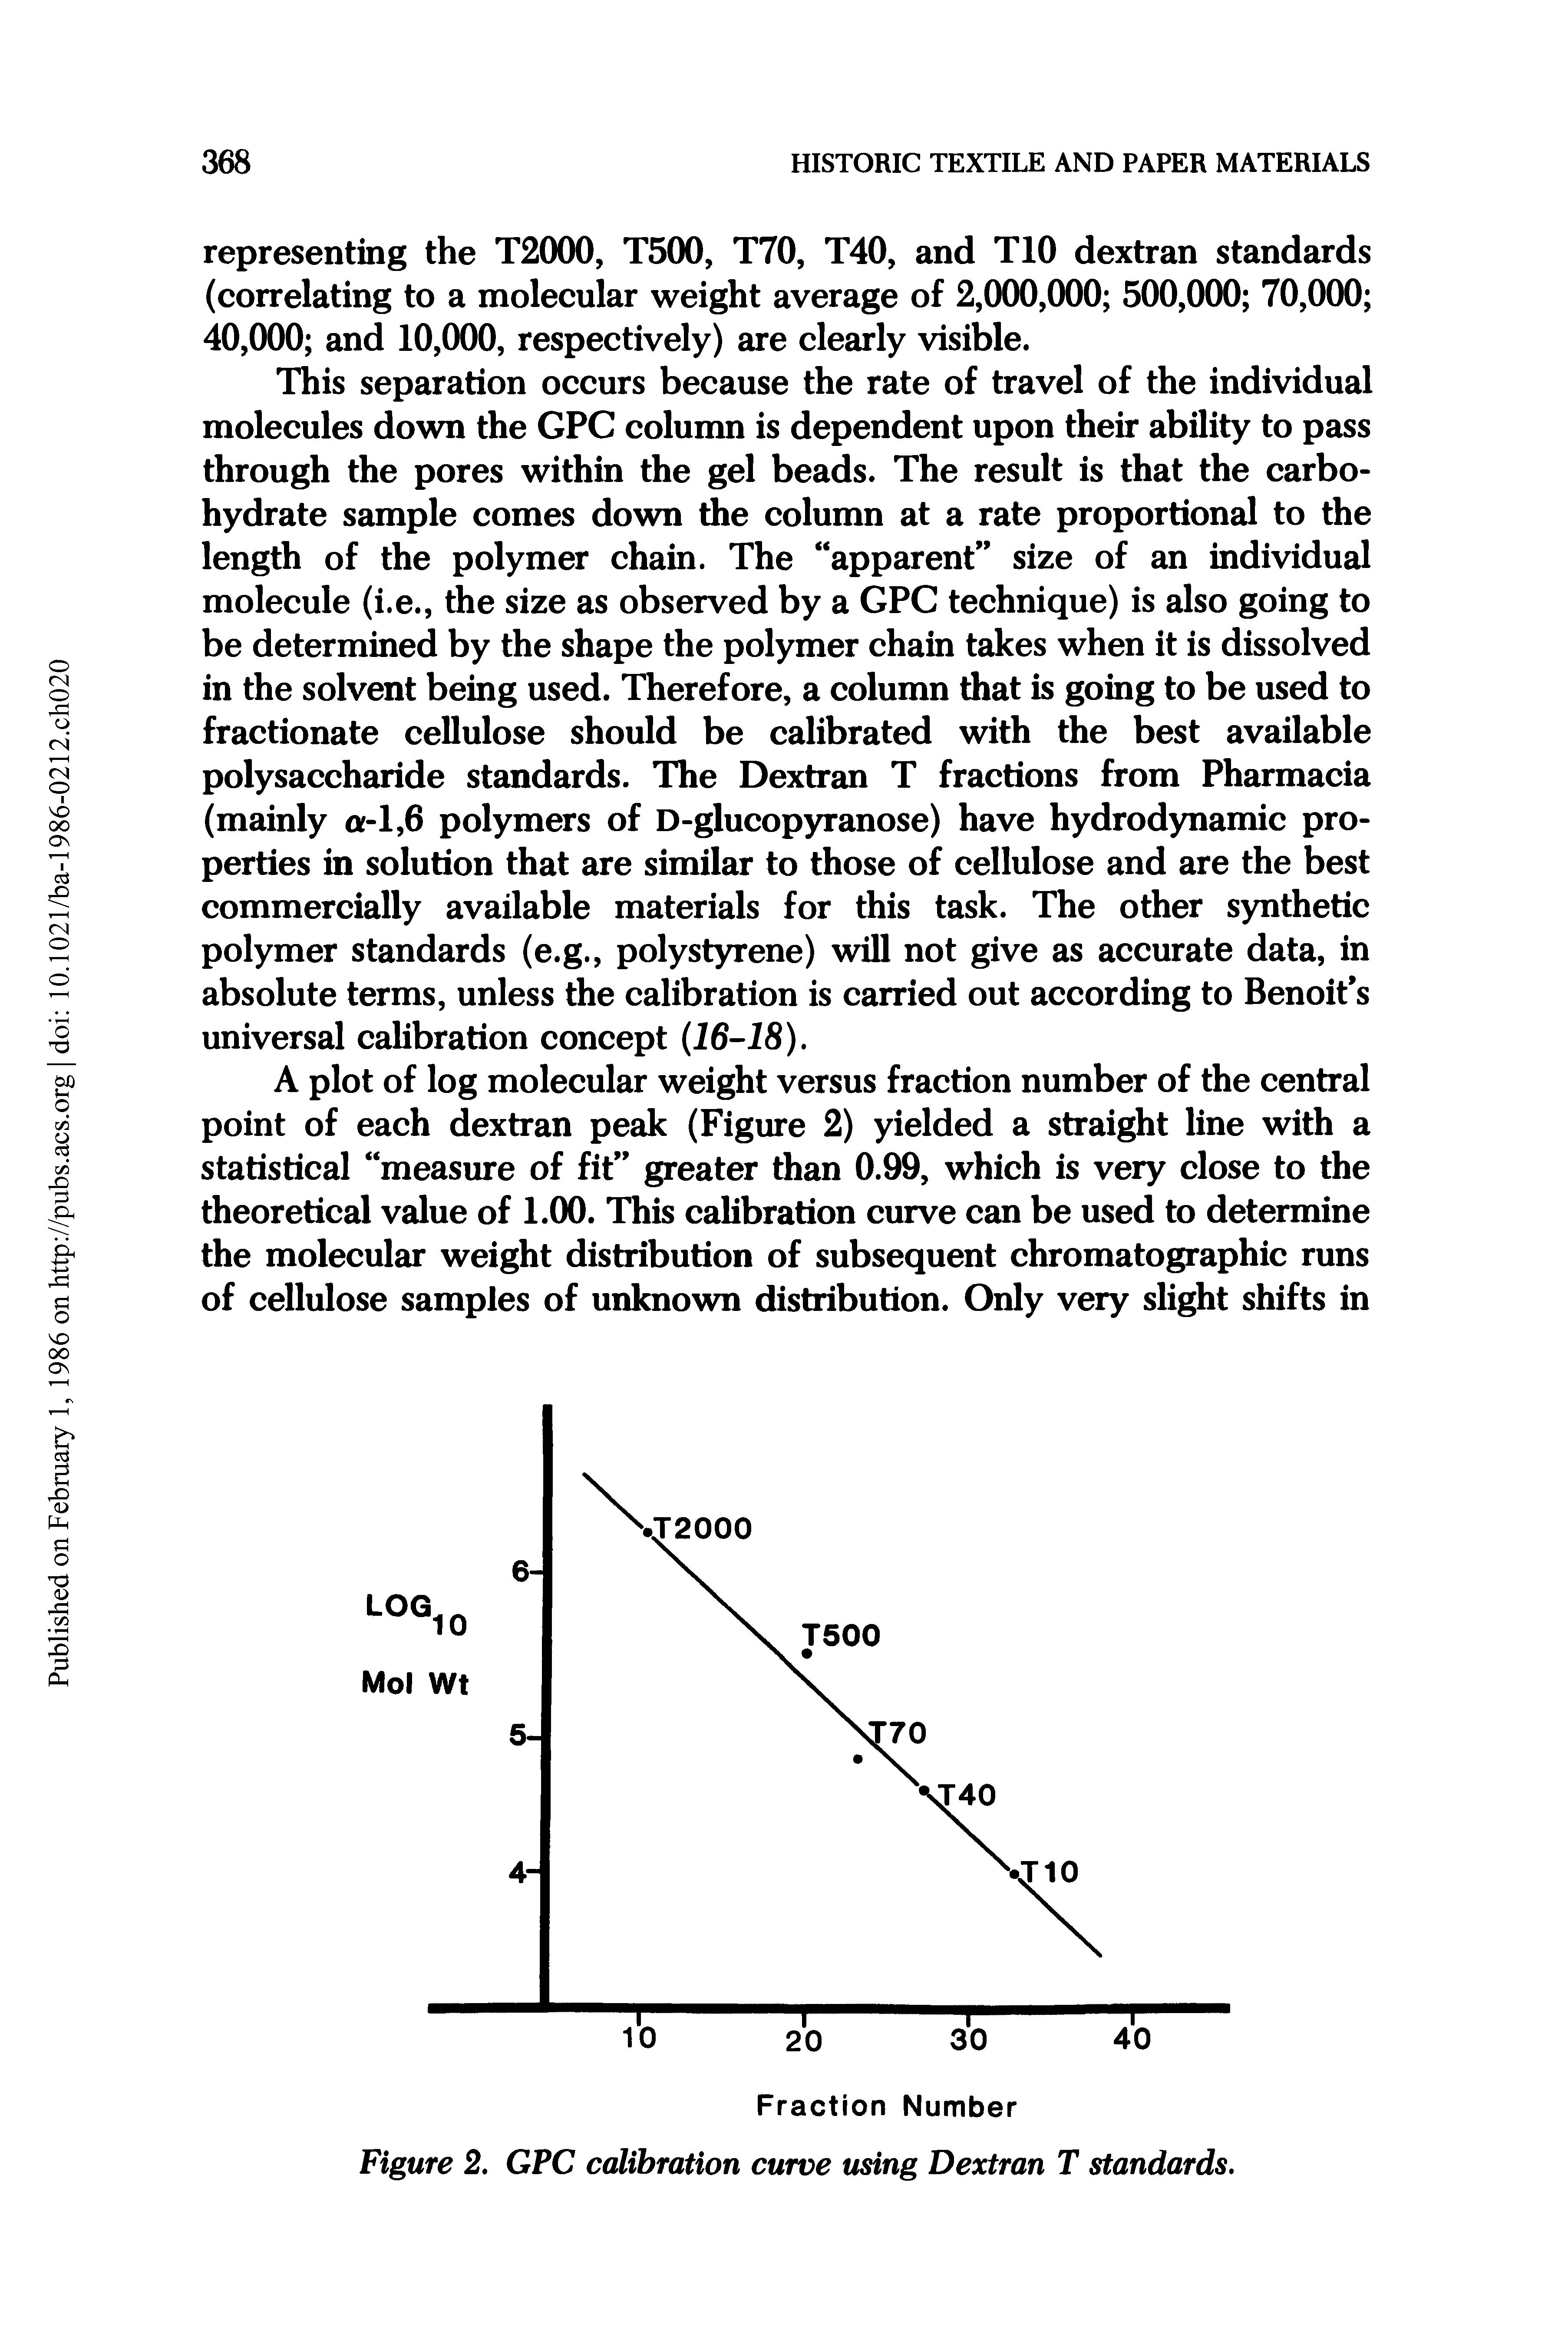 Figure 2. GPC calibration curve using Dextran T standards.